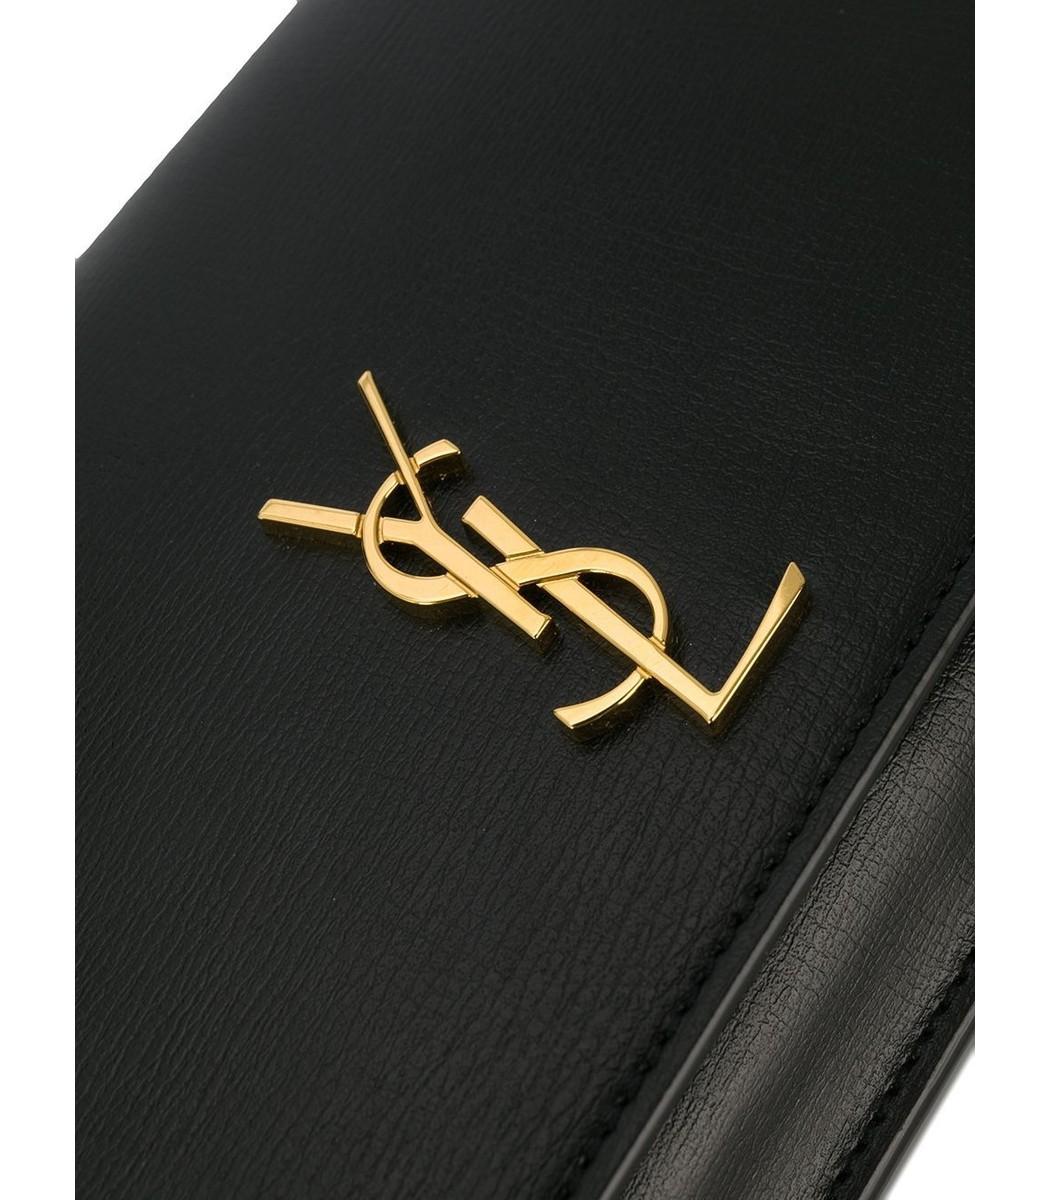 Saint Laurent Leather Ysl Monogram Phone Holder Bag in Black - Lyst